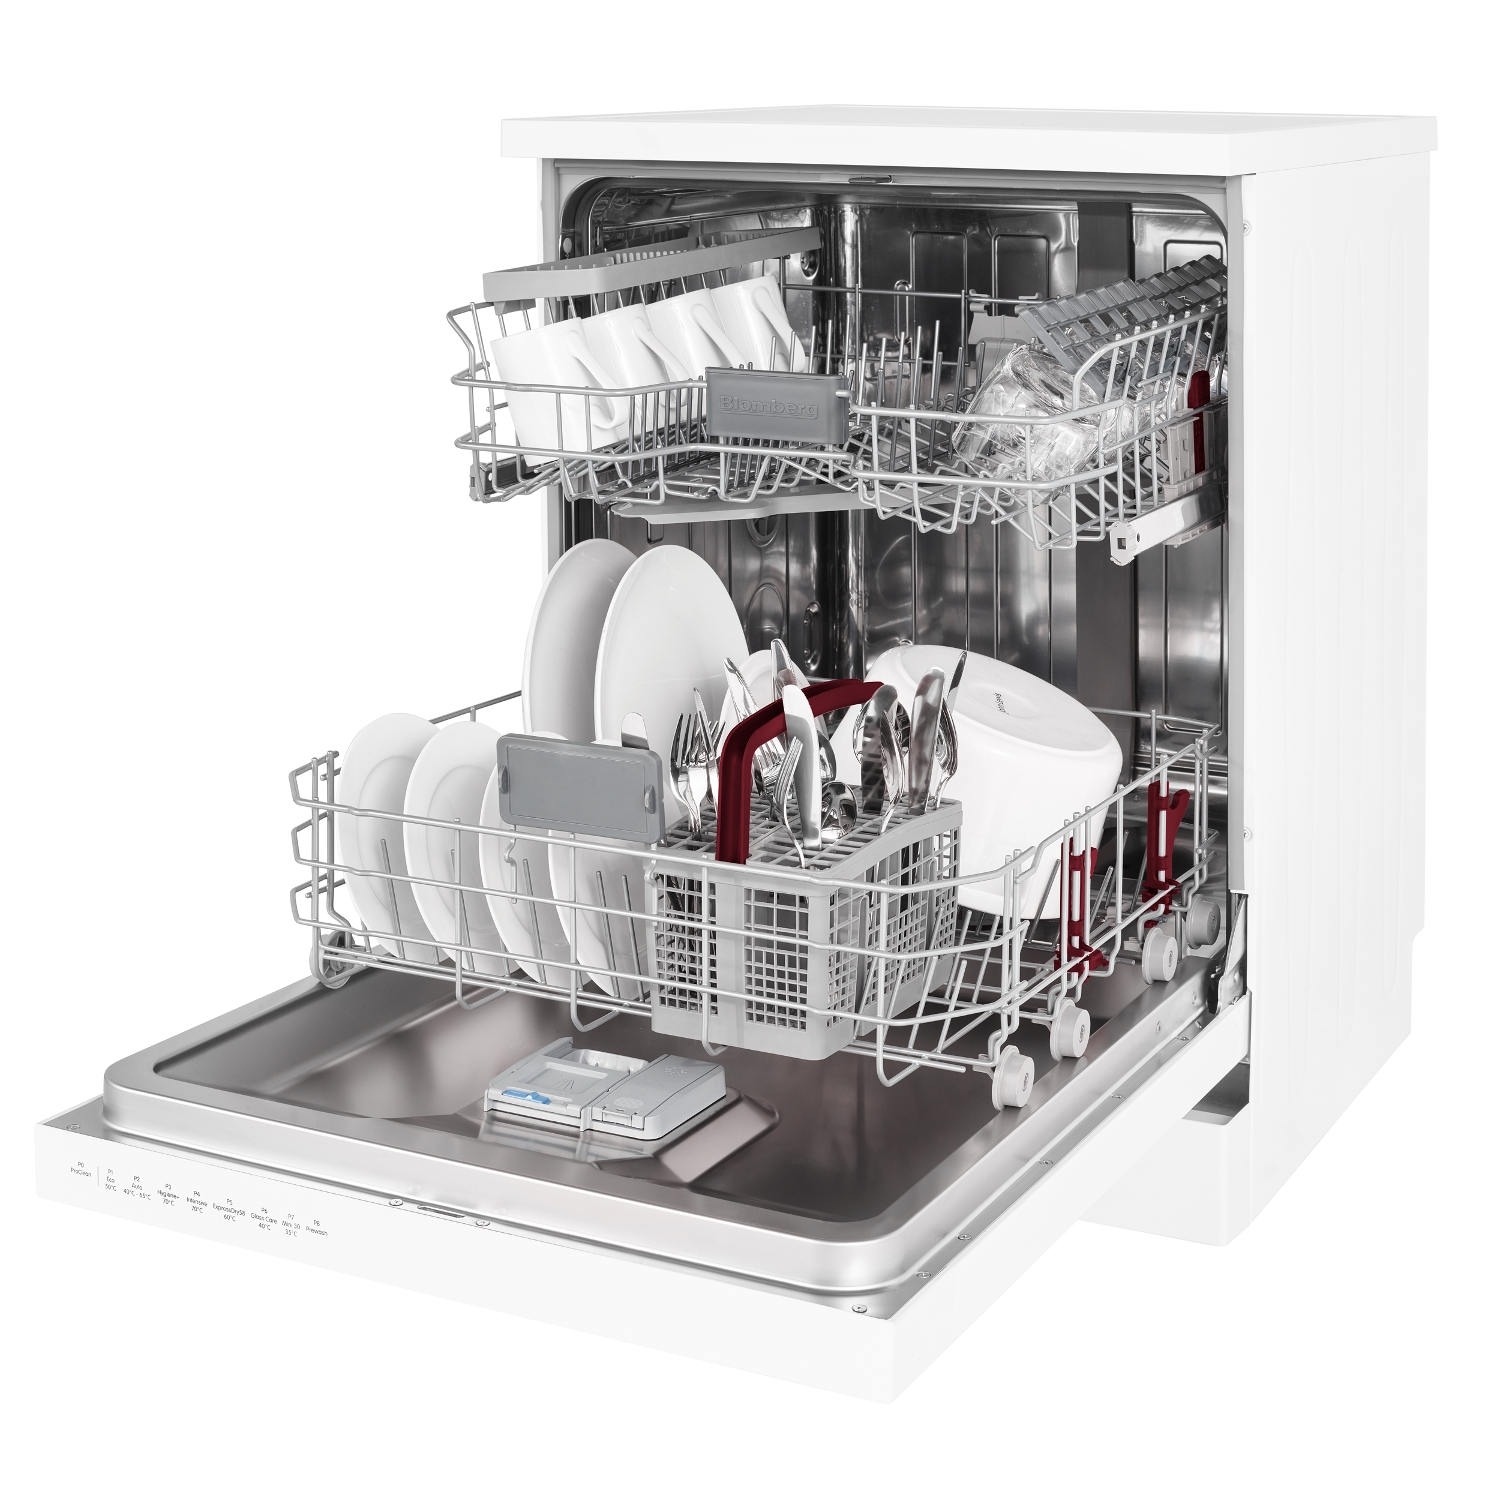 Blomberg LDF42240W Full Size Dishwasher - White - 14 Place Settings - 3